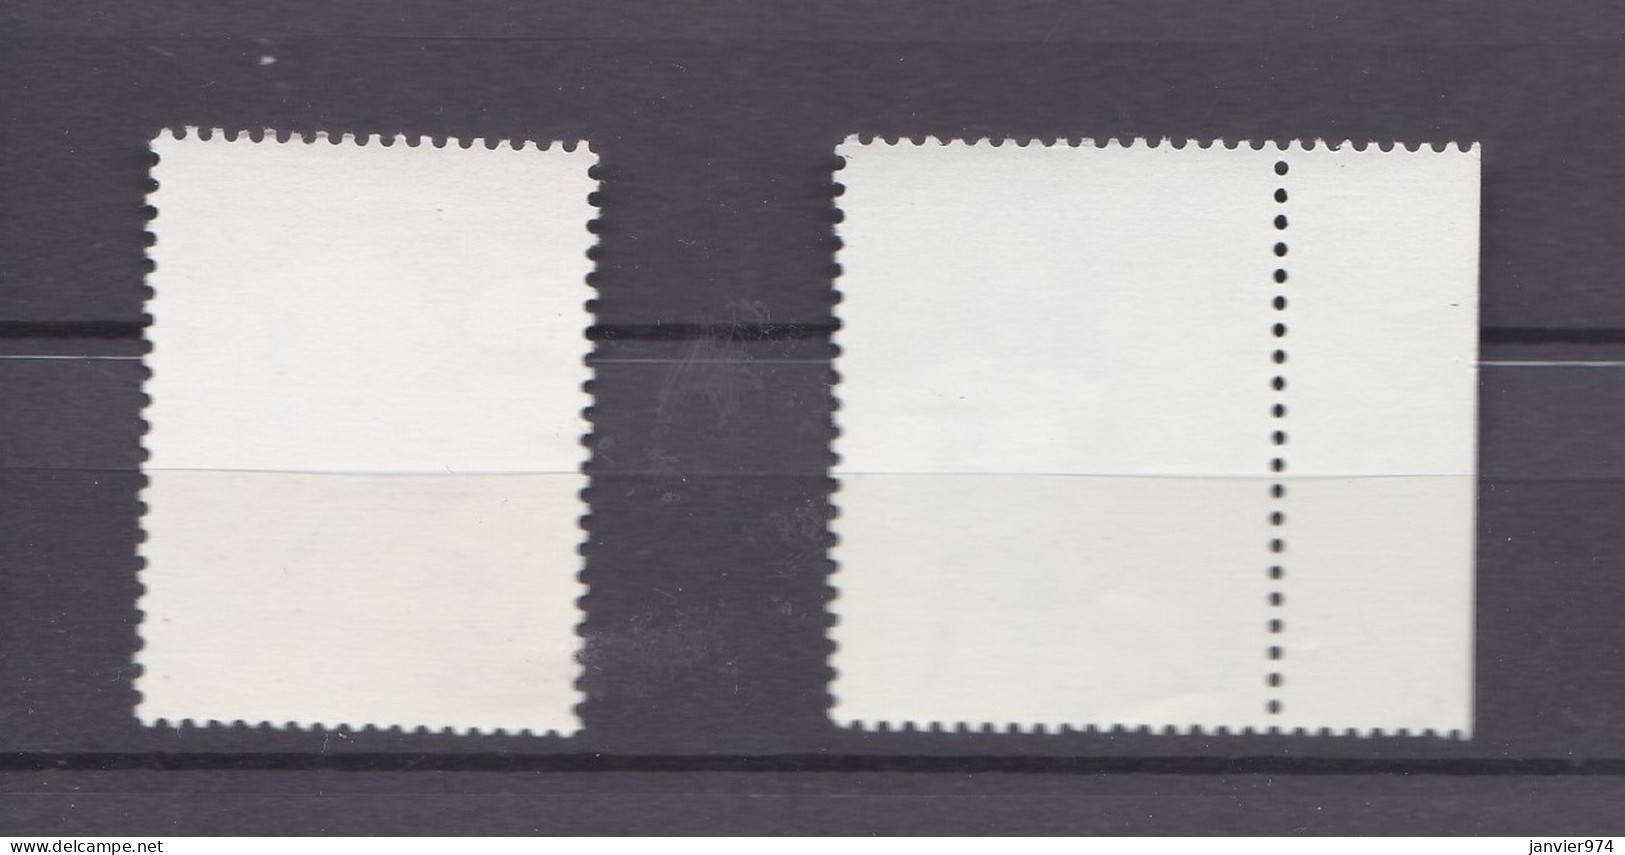 Chine 1982, Anniversaire De Guo Moruo, La Serie Complète 1834 à 1835, 2 Timbres Neufs , Voir Scan Recto Verso - Unused Stamps